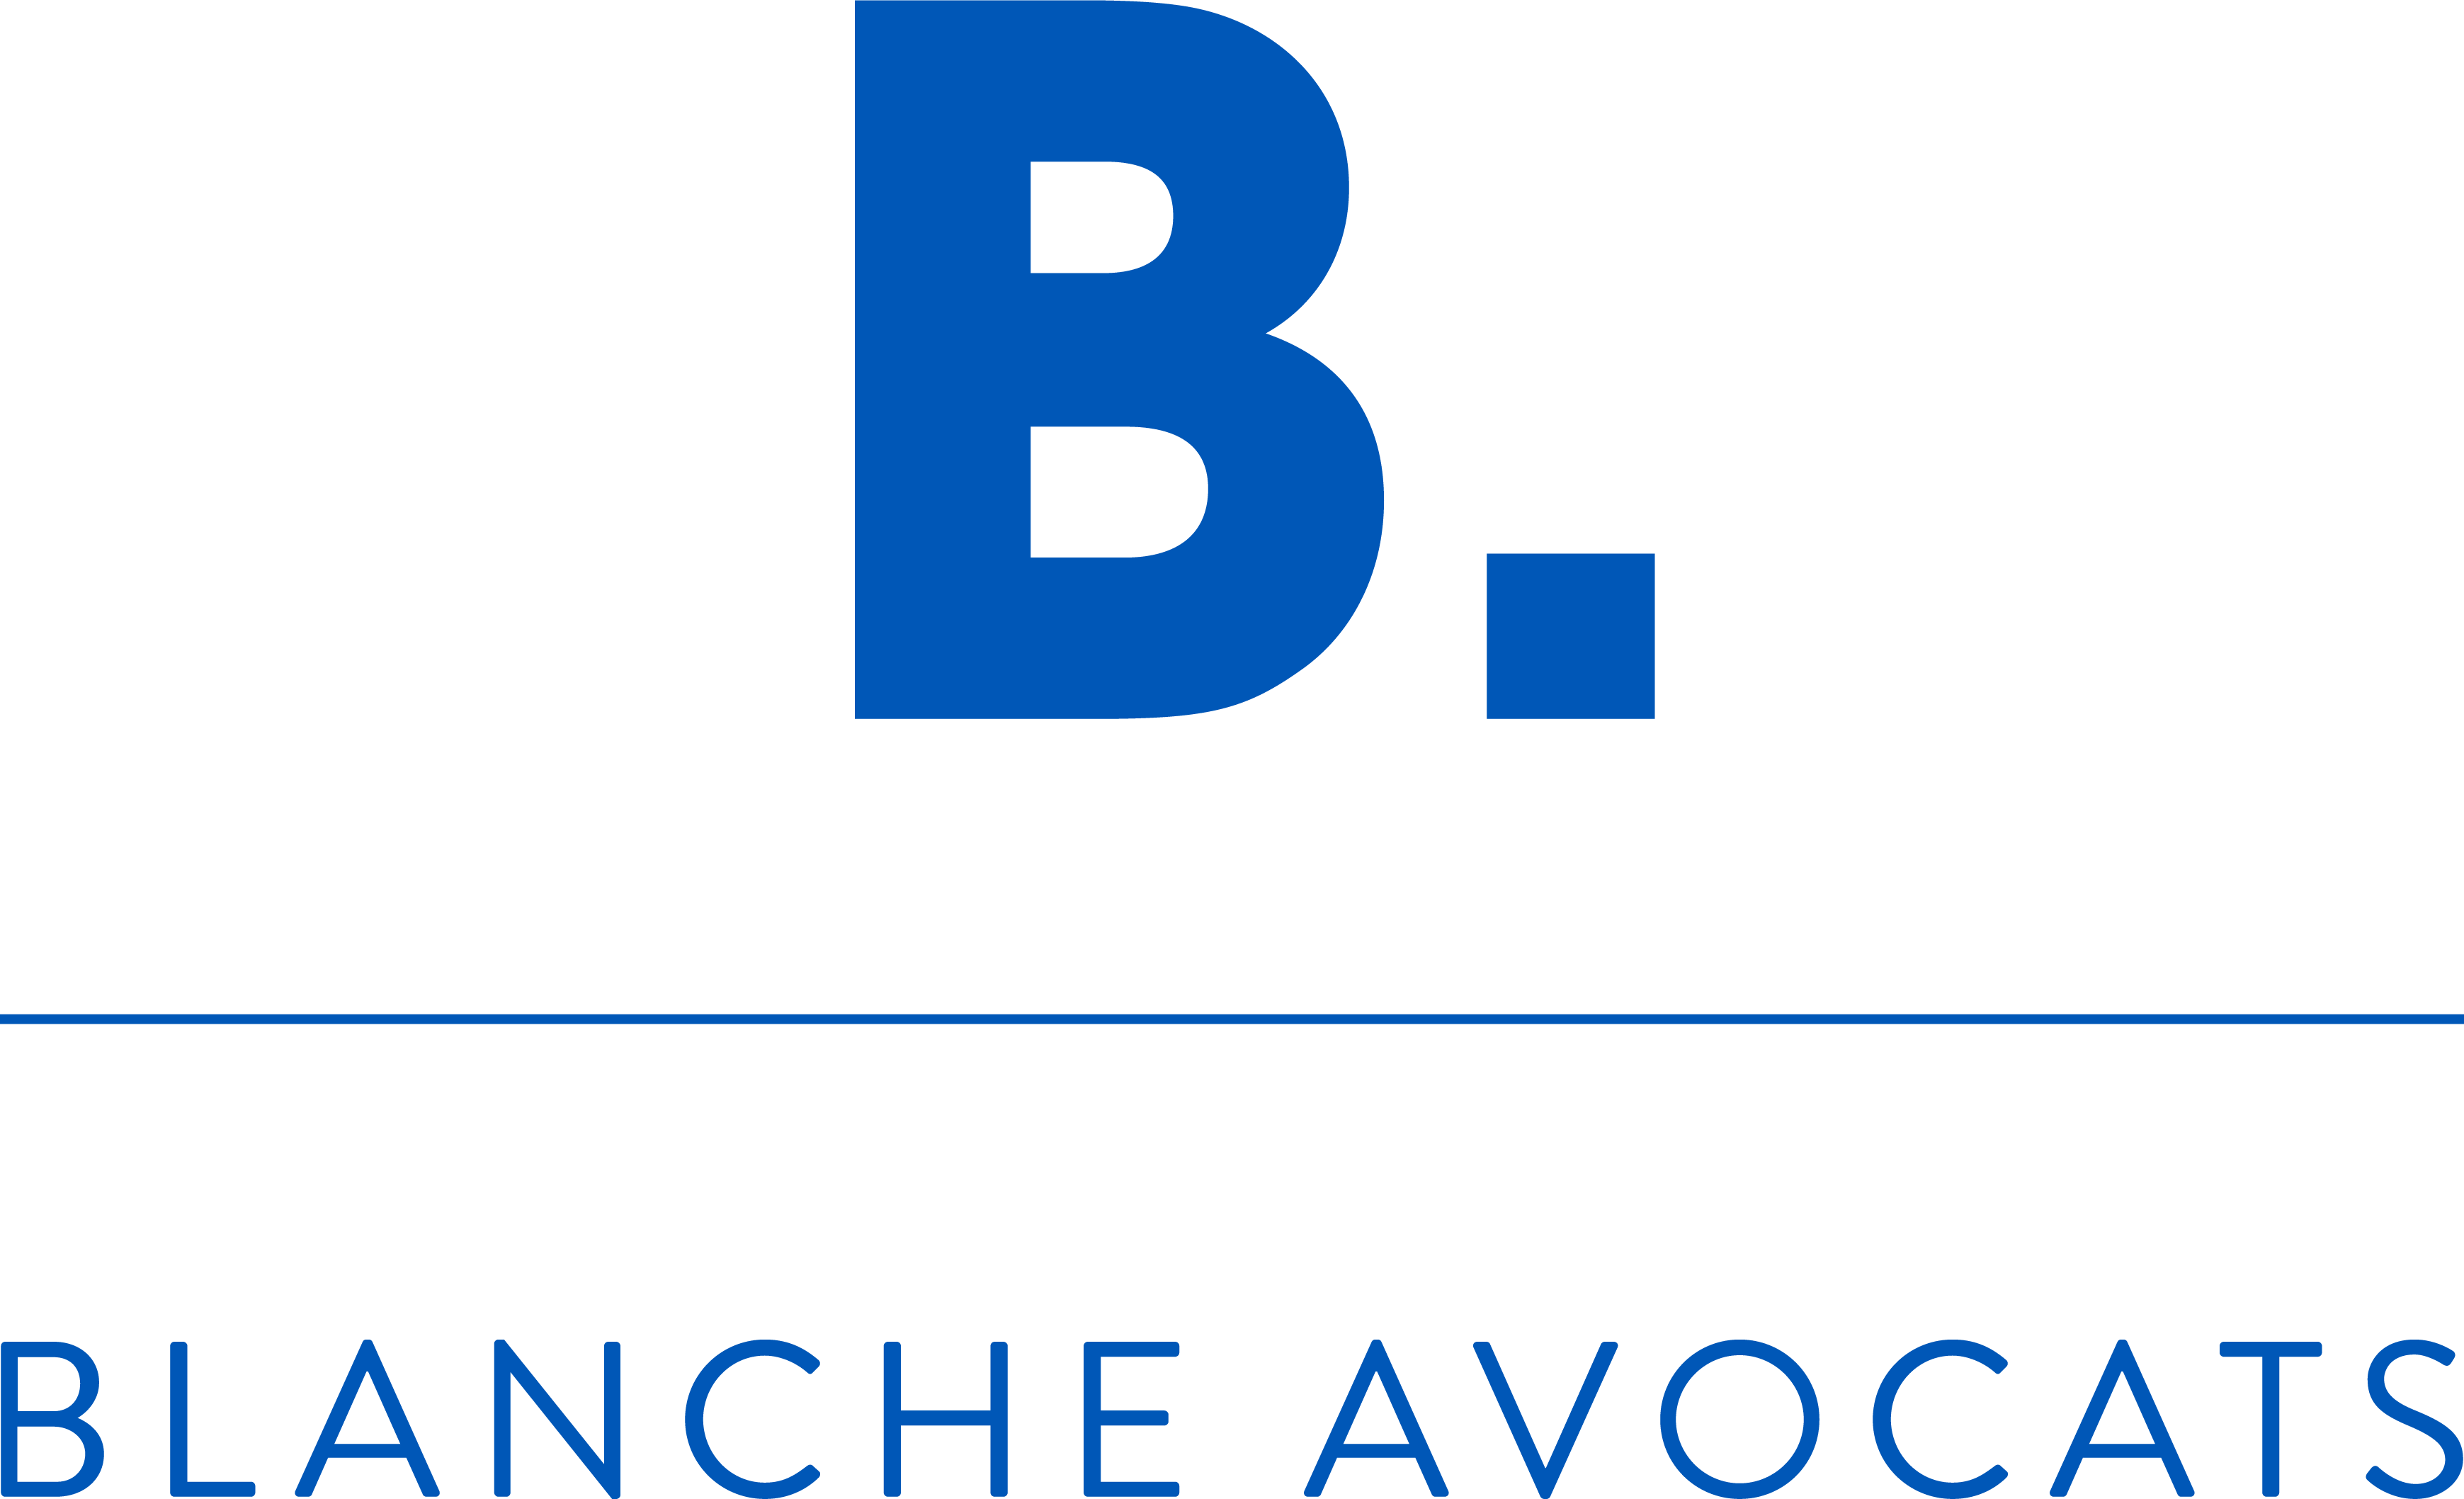 Blanche Avocats